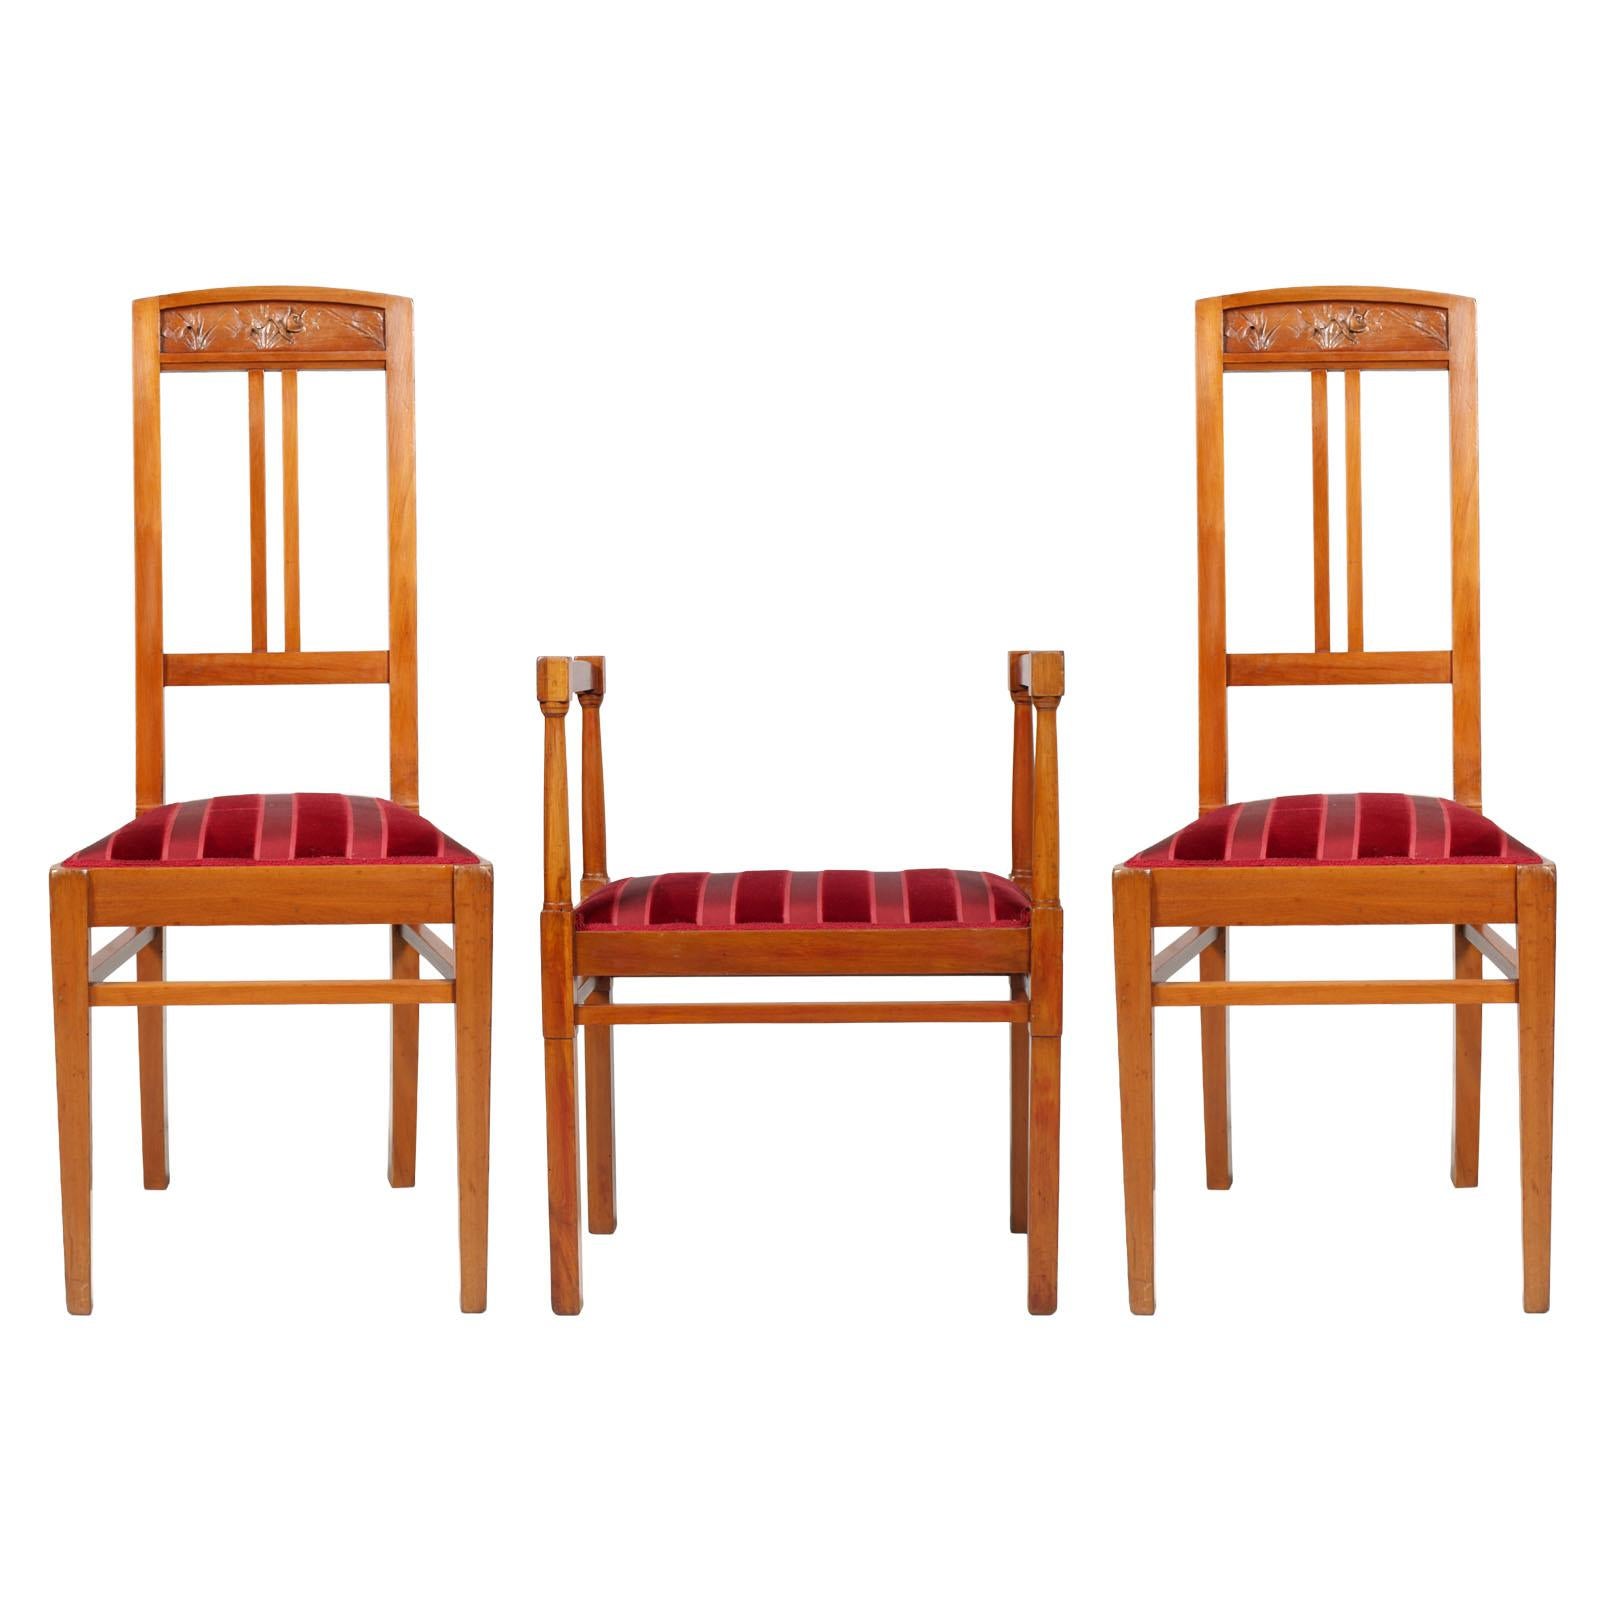 Italian Art Nouveau Side Chairs with Stool, Blond Walnut, Wax-Polished For Sale